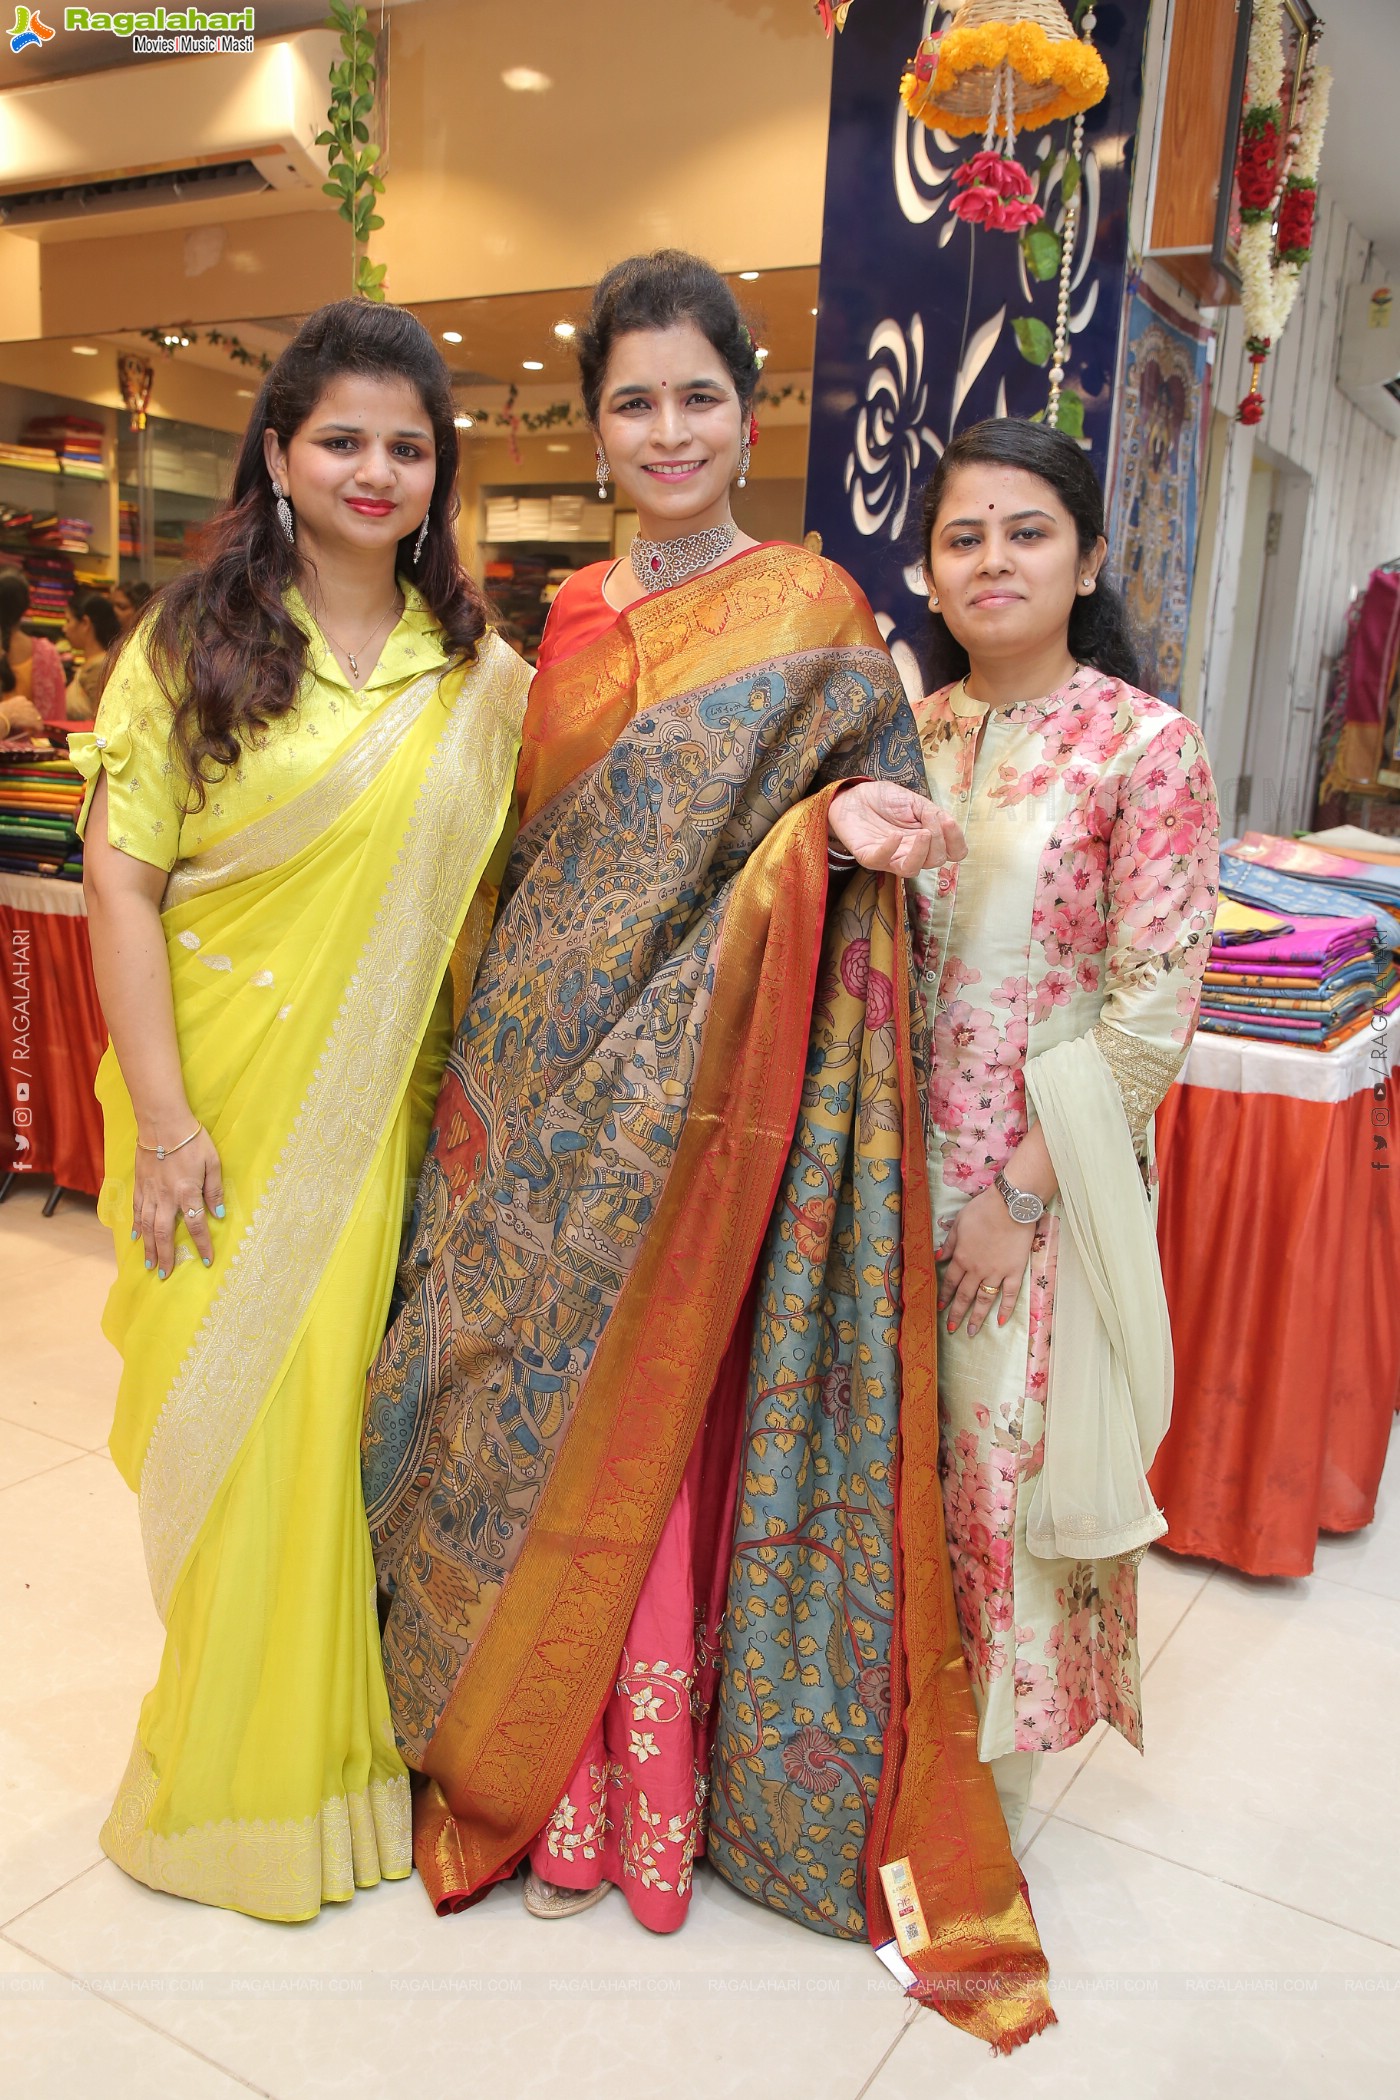 Sri Avanthi Silks 7th Anniversary Celebrations and Models Fashion Walk